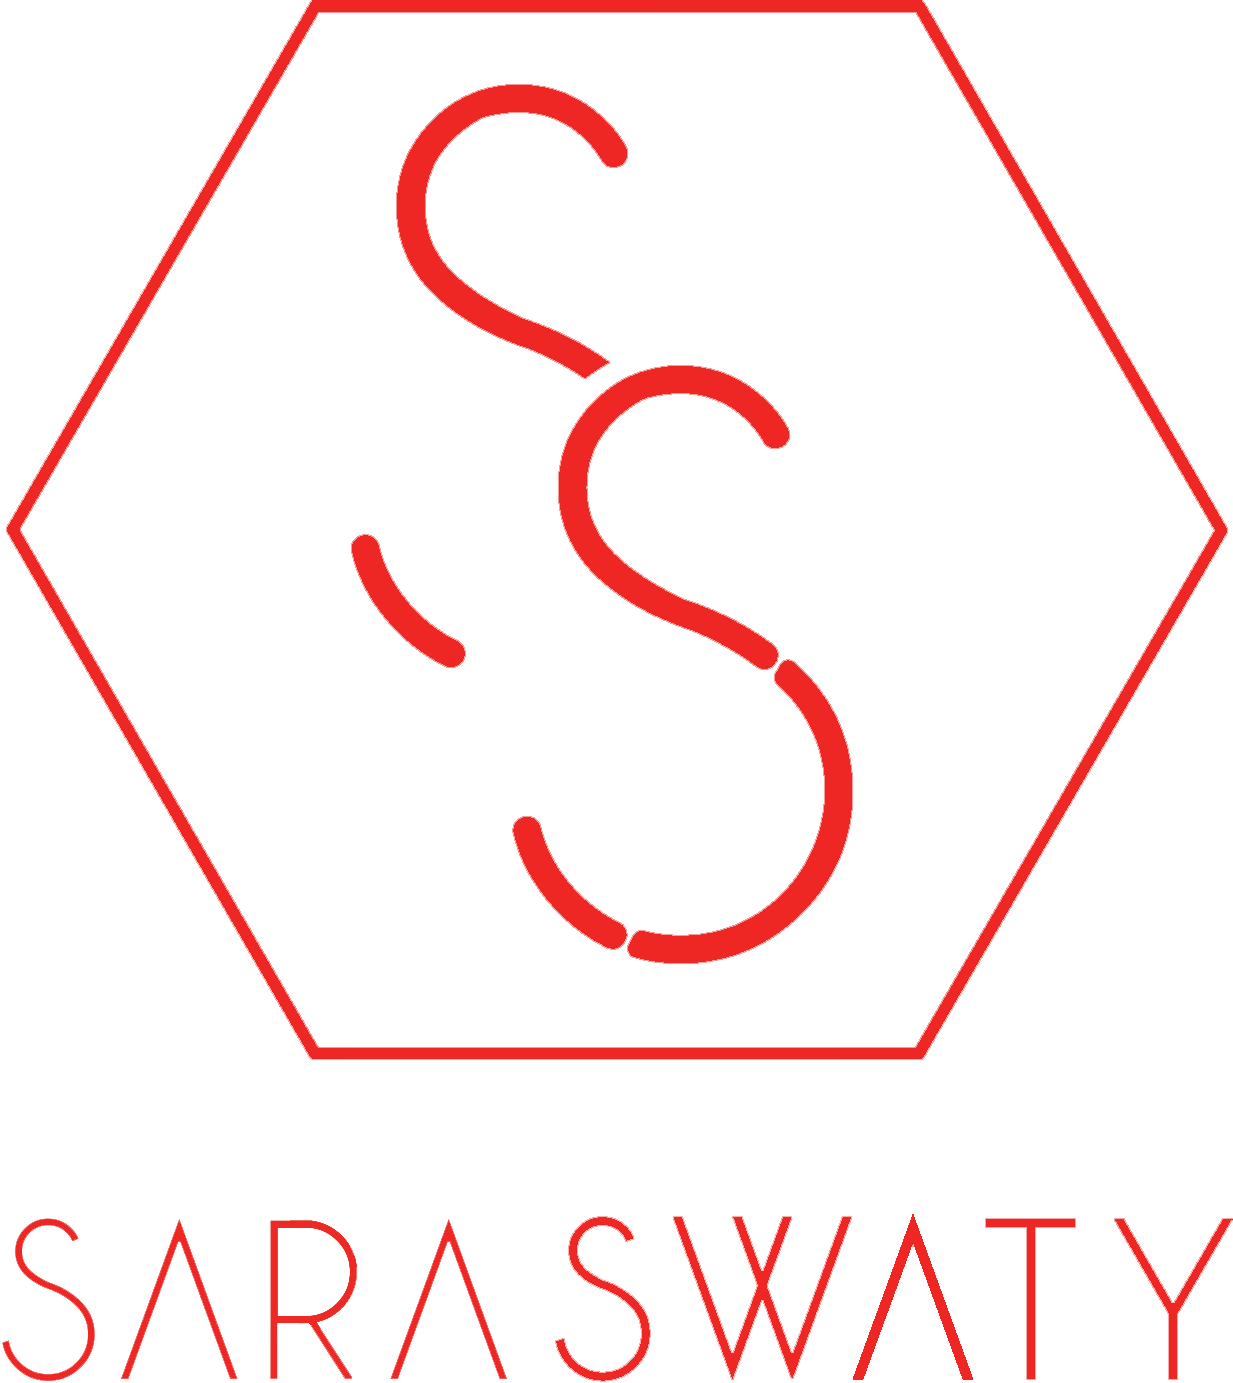 Sara Swaty